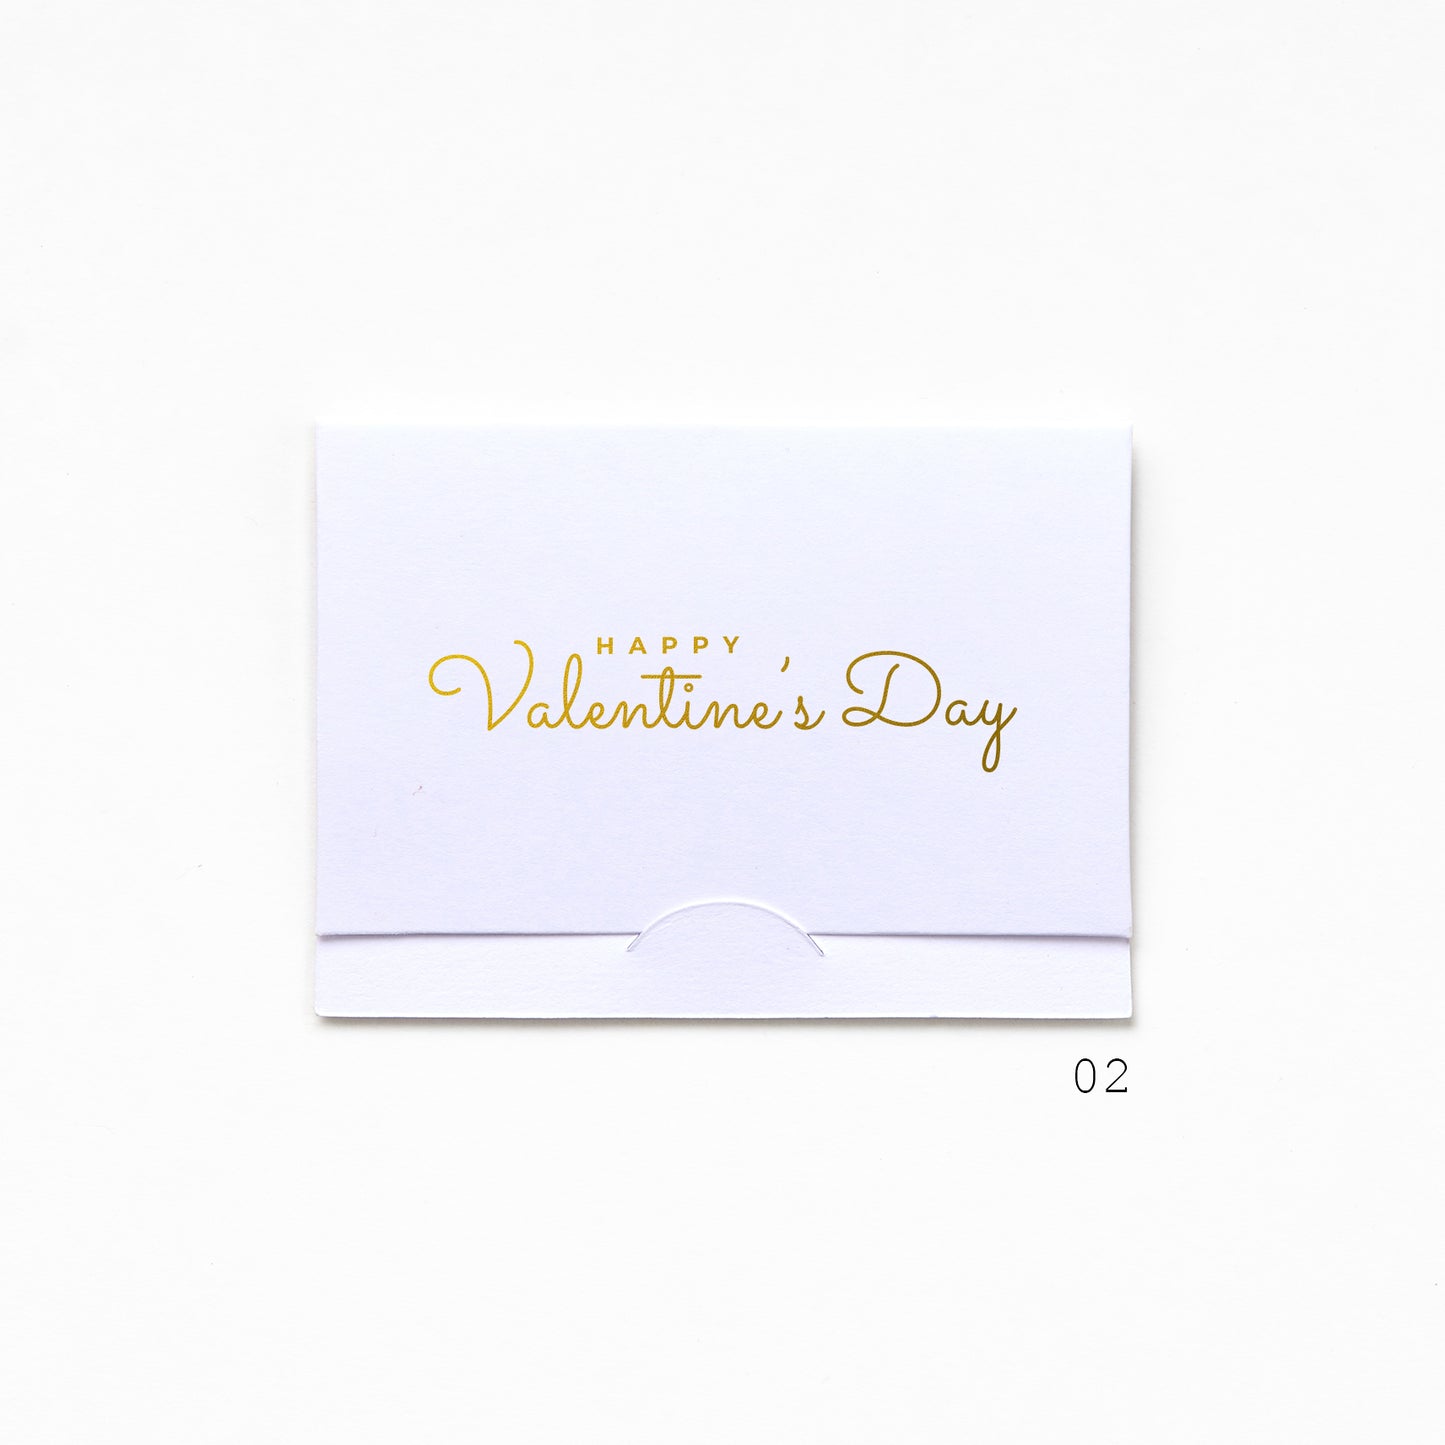 Pocket Greeting Card - Happy Valentine's Day 02